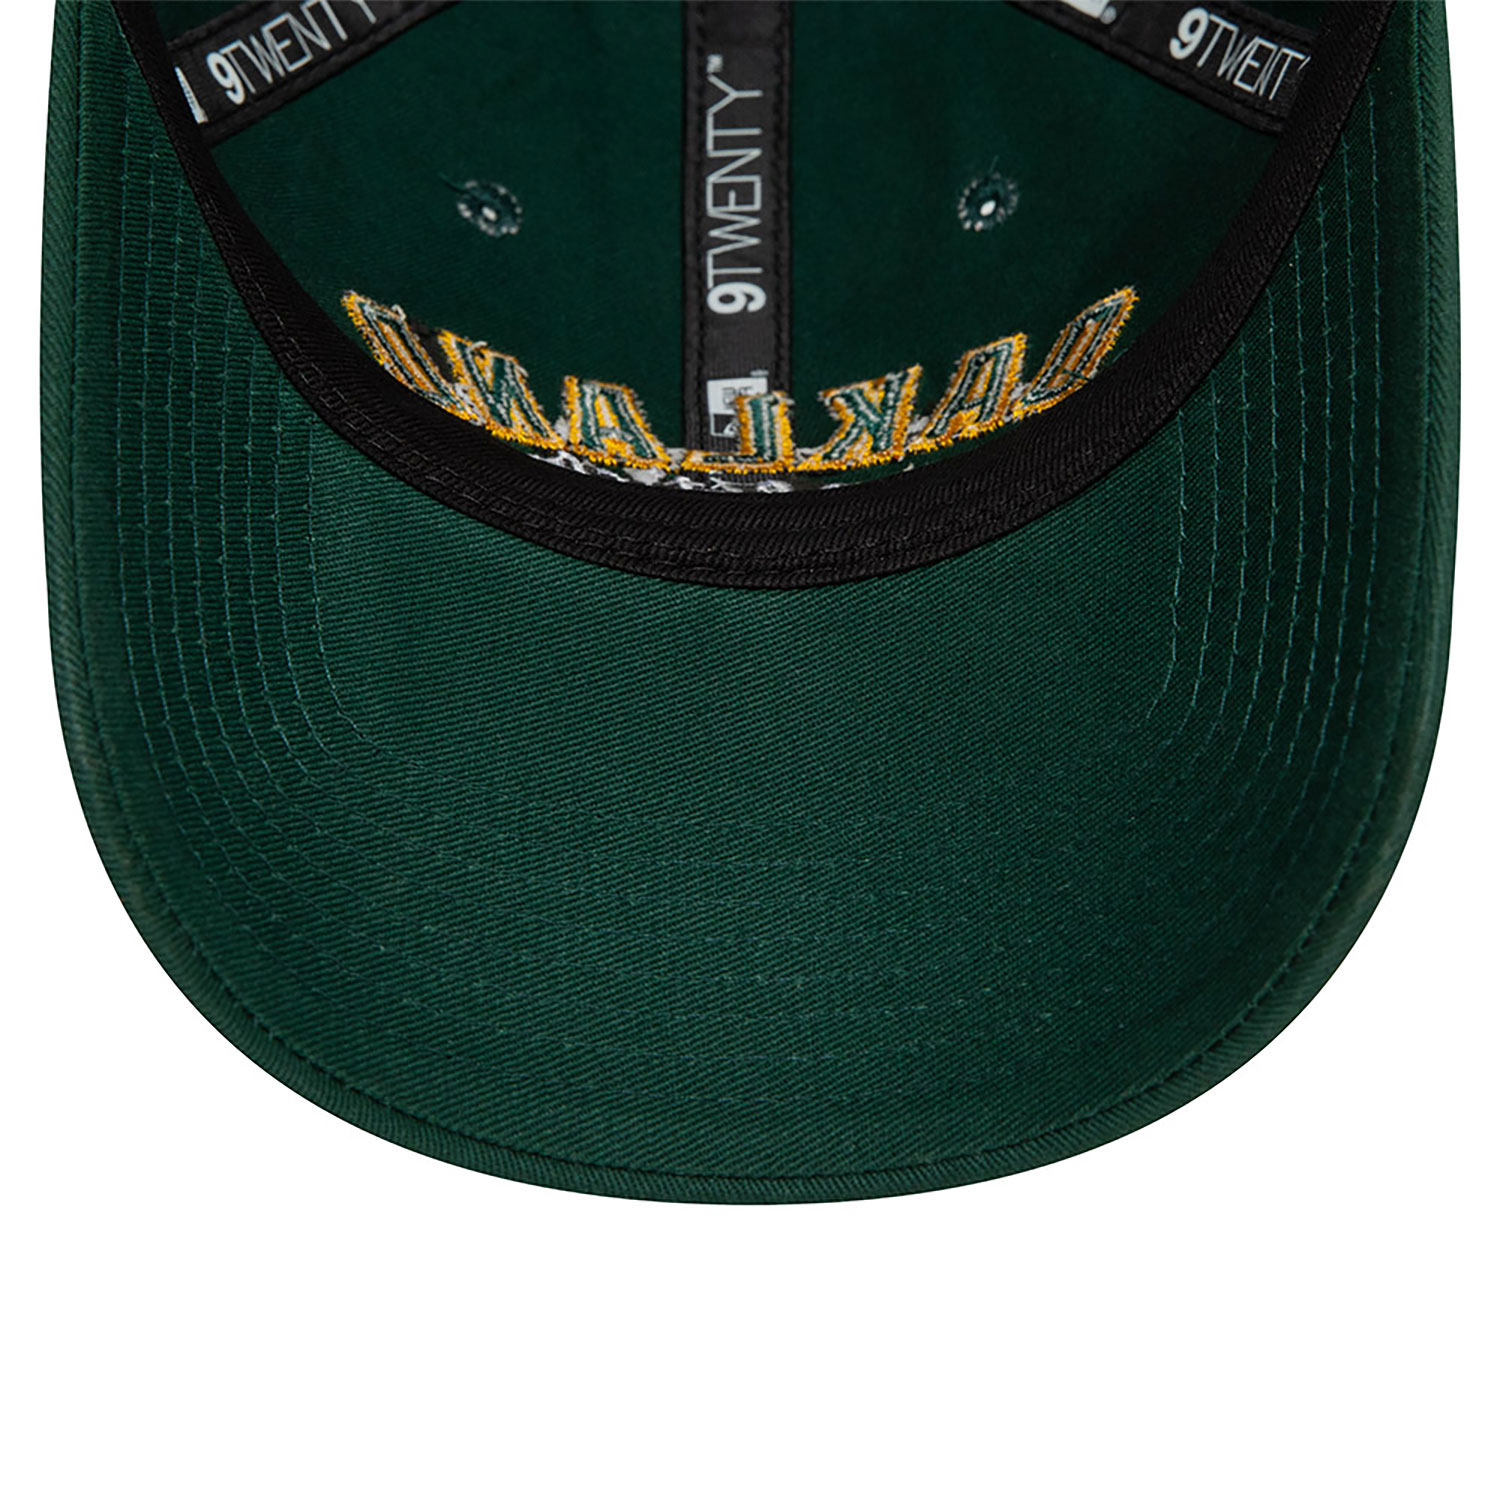 Oakland Athletics MLB Wordmark Dark Green 9TWENTY Adjustable Cap